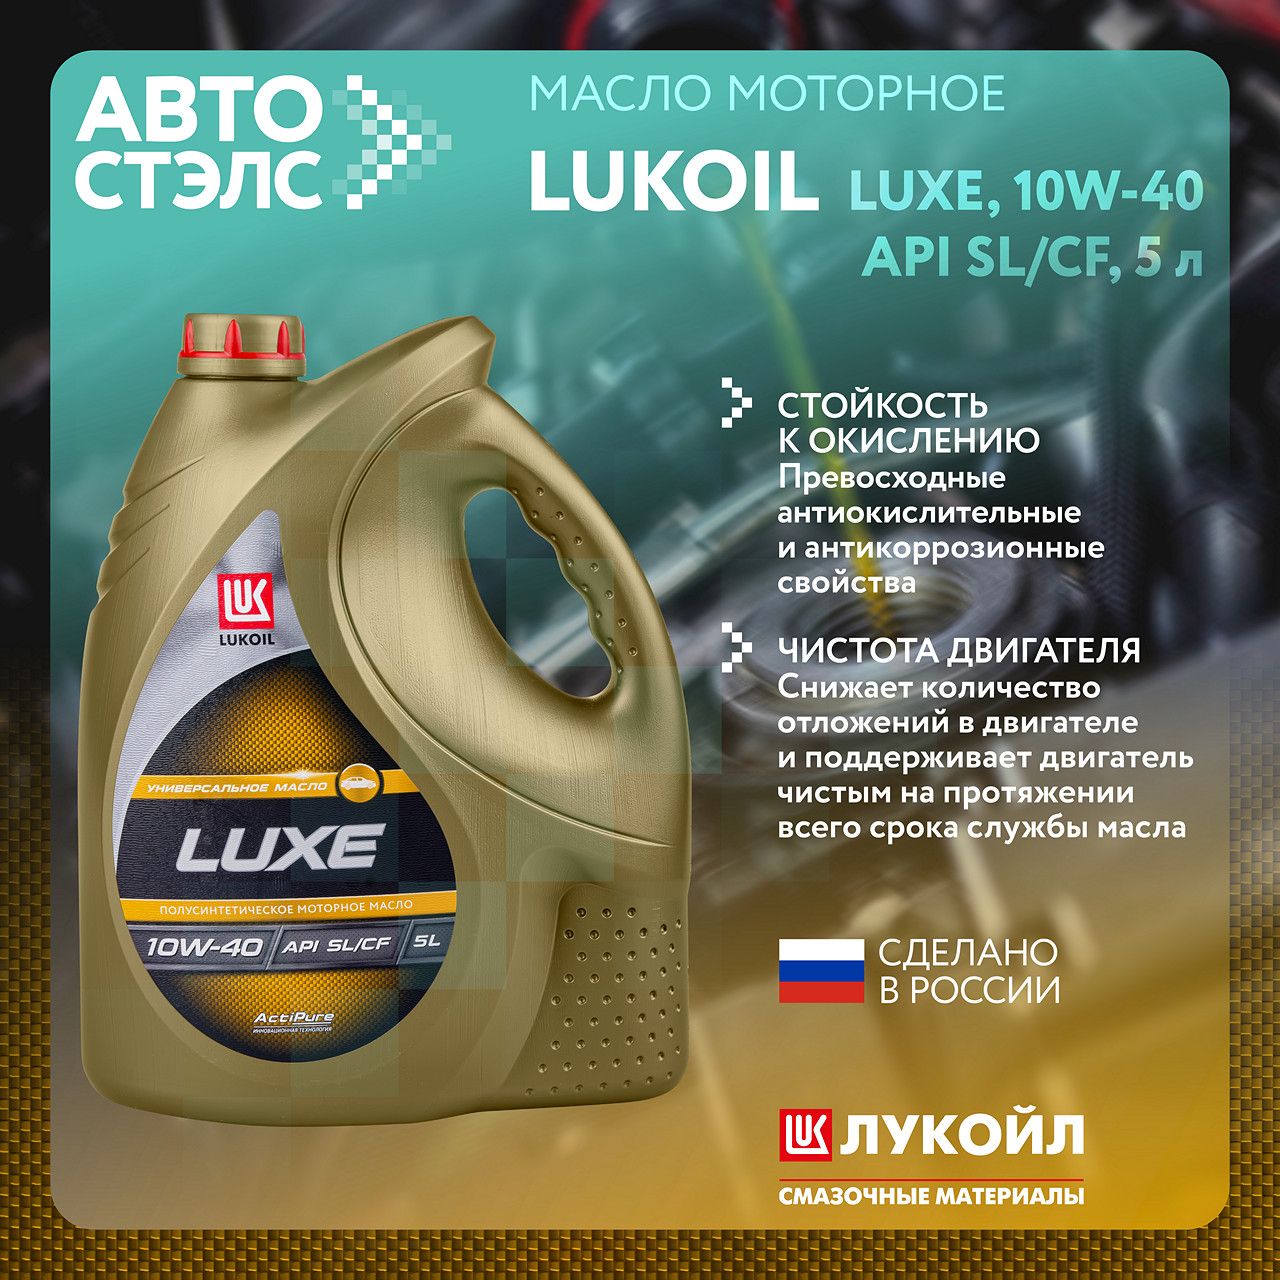 Характеристики масла Лукойл Люкс 10w 40.